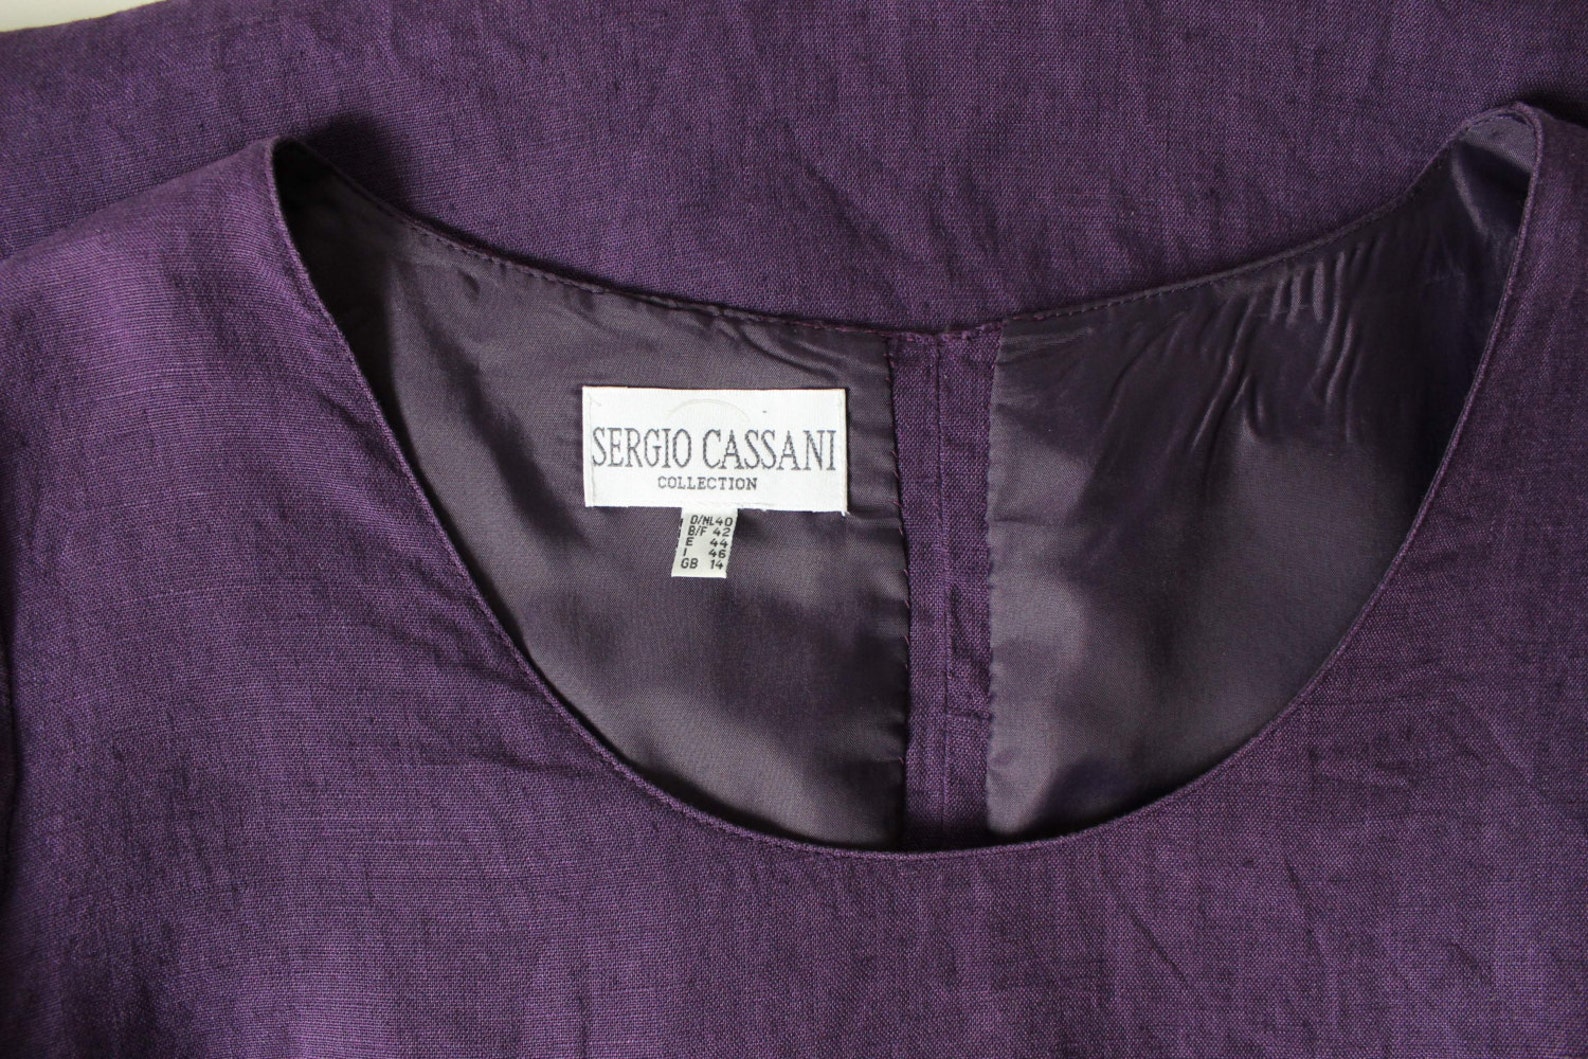 Linen Summer Dress Purple Dress Maxi Short Sleeve Dress Medium | Etsy